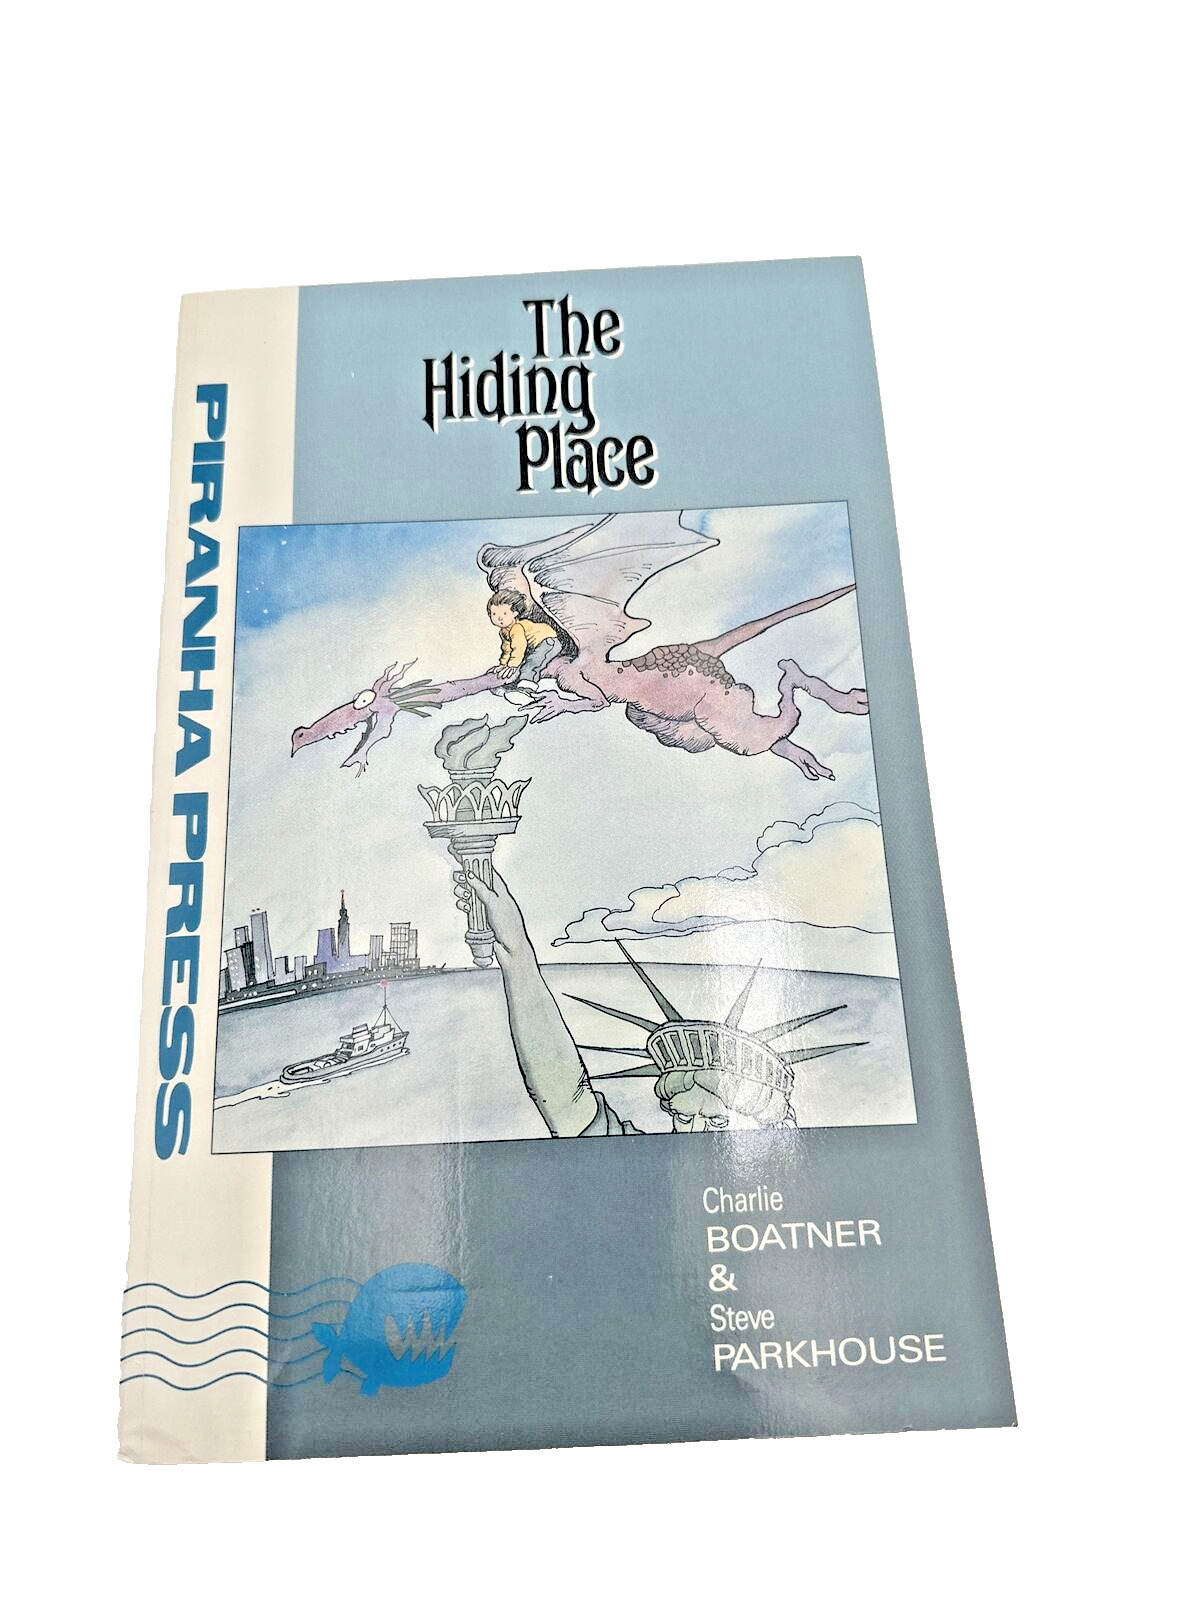 The Hiding Place Charlie Boatner & Steve Parkhouse Piranha Press 1990 Very Good